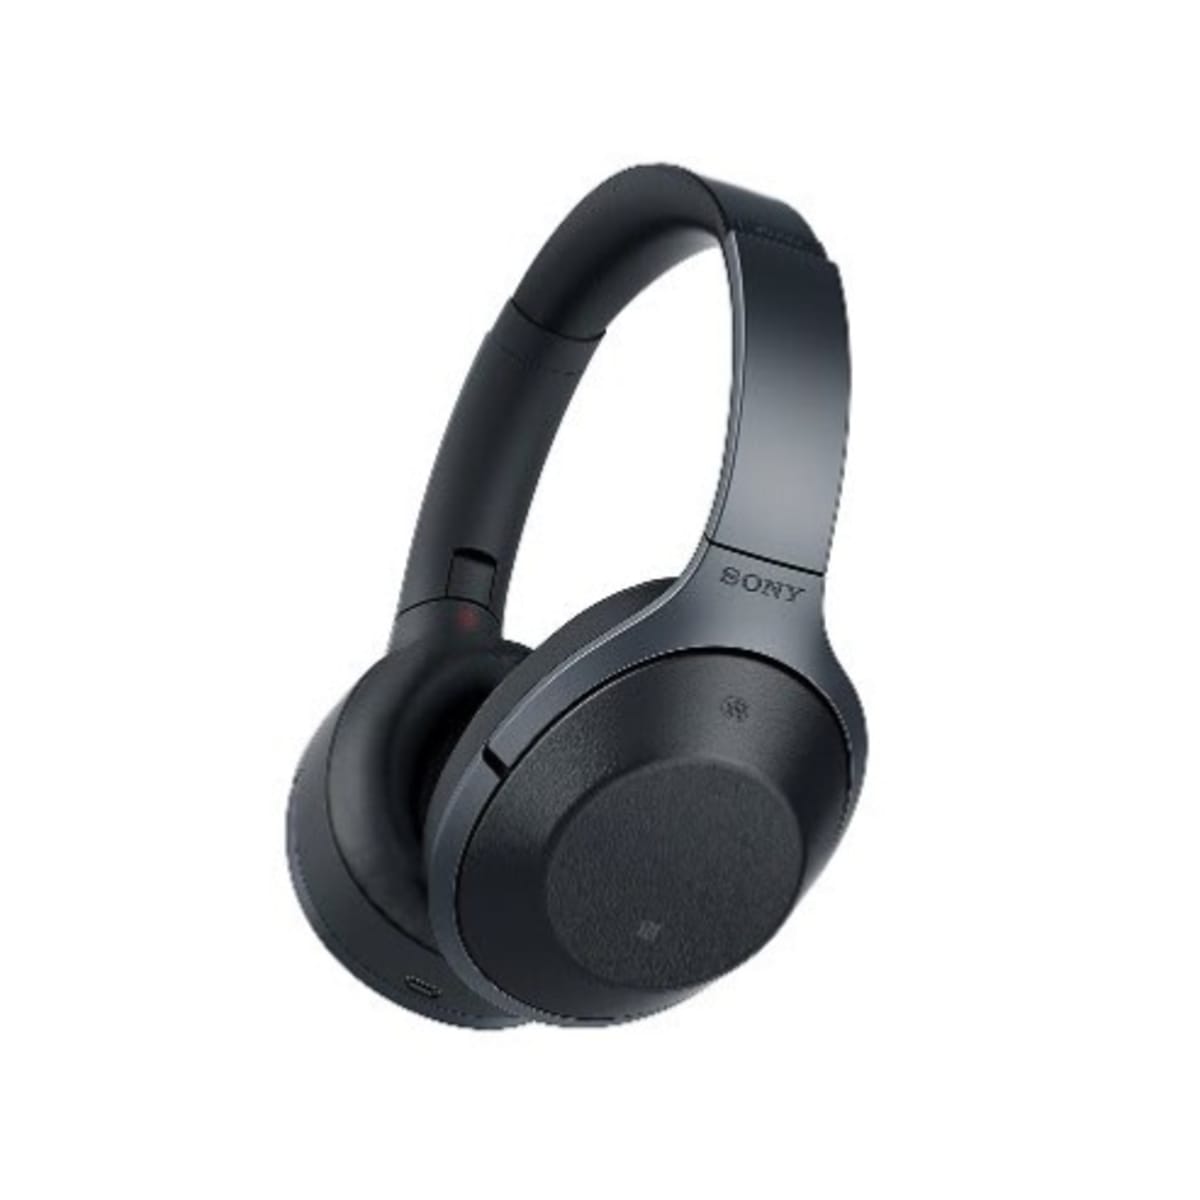 Sony Wireless Bluetooth Headphone - Black - Mdr1000x/b | Konga